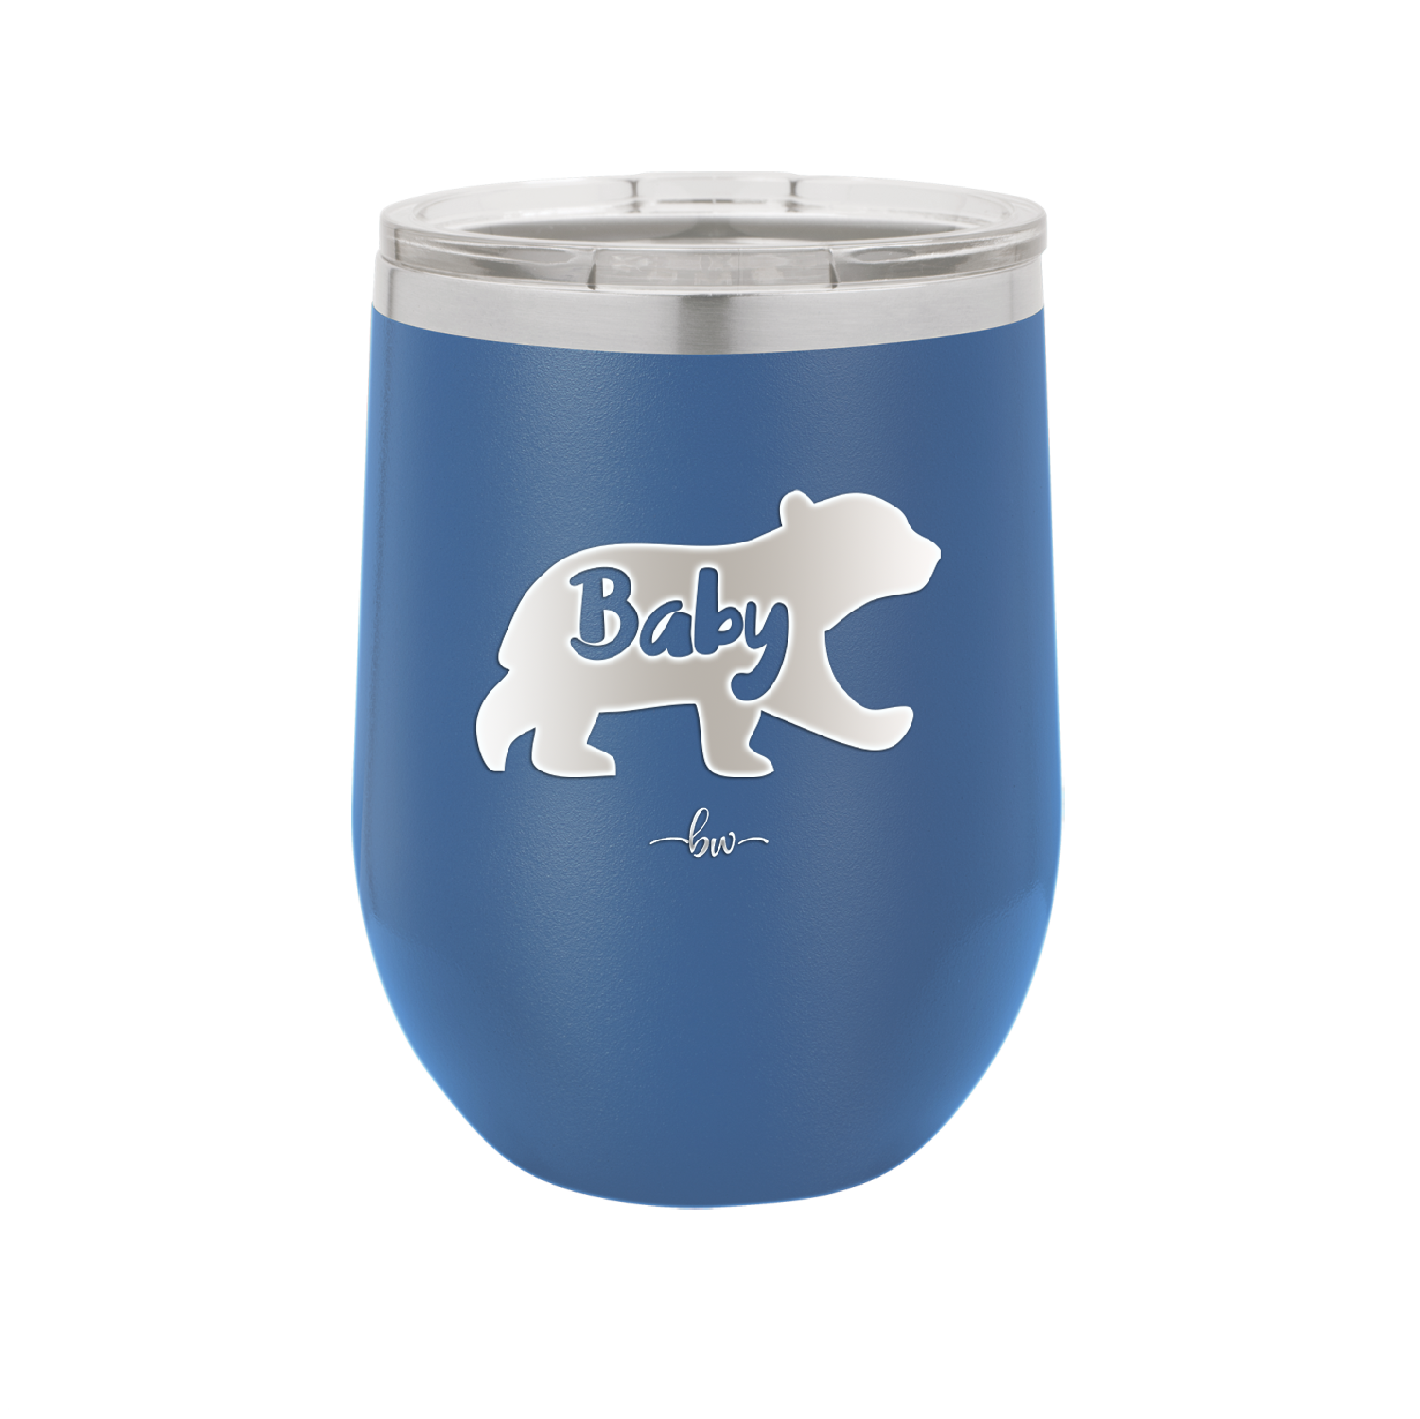 Baby Bear - Laser Engraved Stainless Steel Drinkware - 1143 -